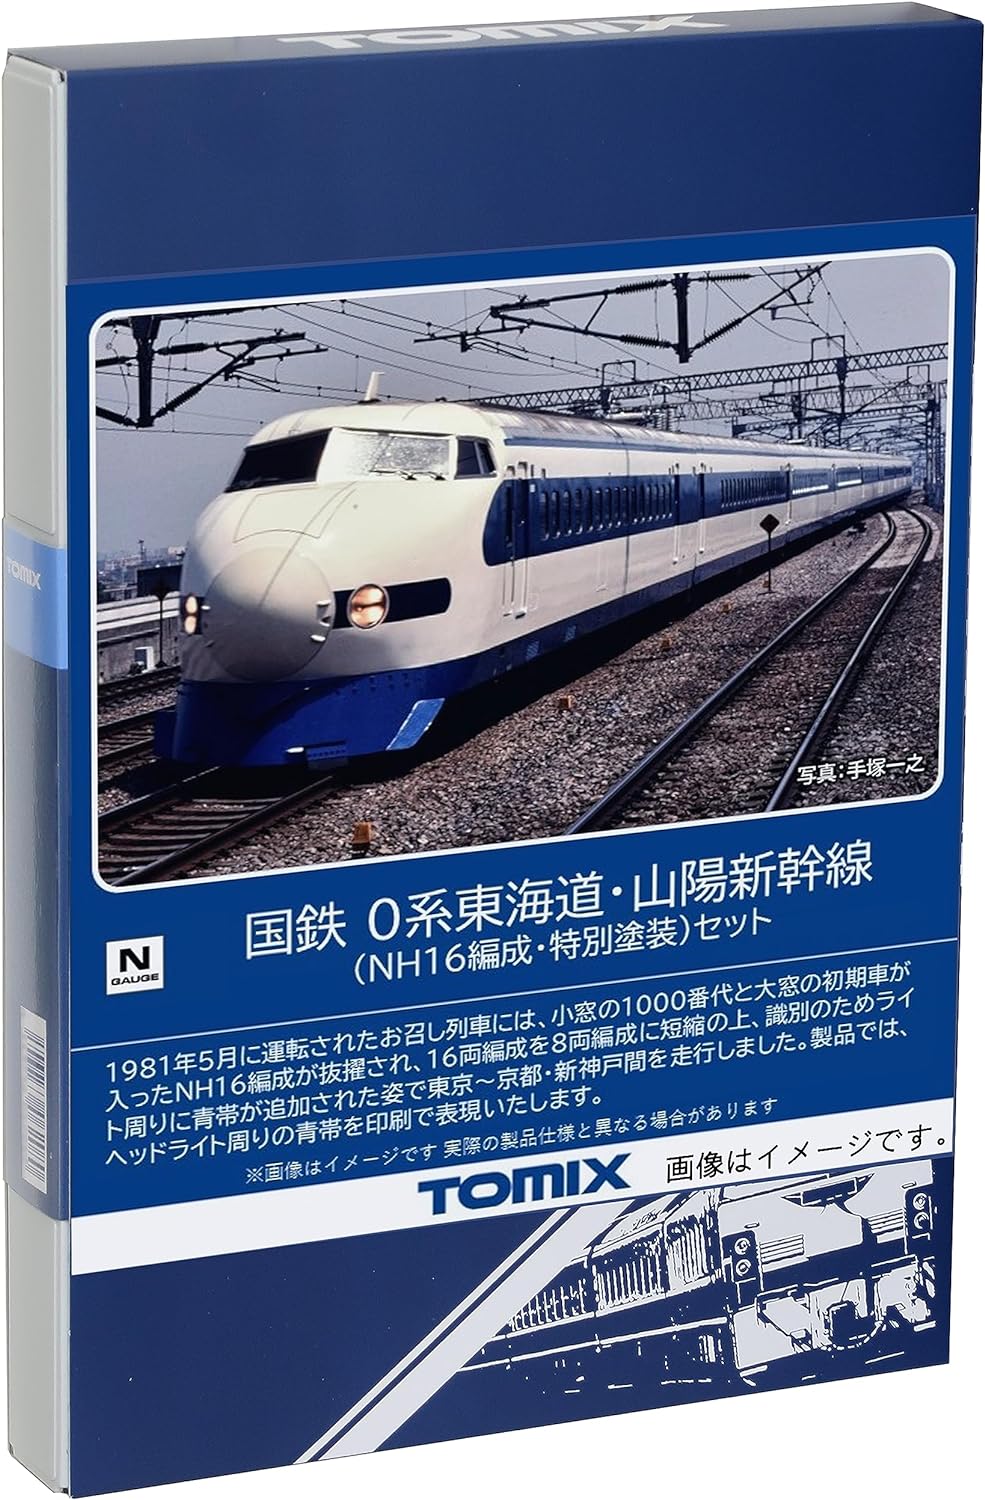 TOMIX 98790 N Gauge JNR Series 0 Series NH16 Organization, Special Paint Set, Railway Model Train - BanzaiHobby